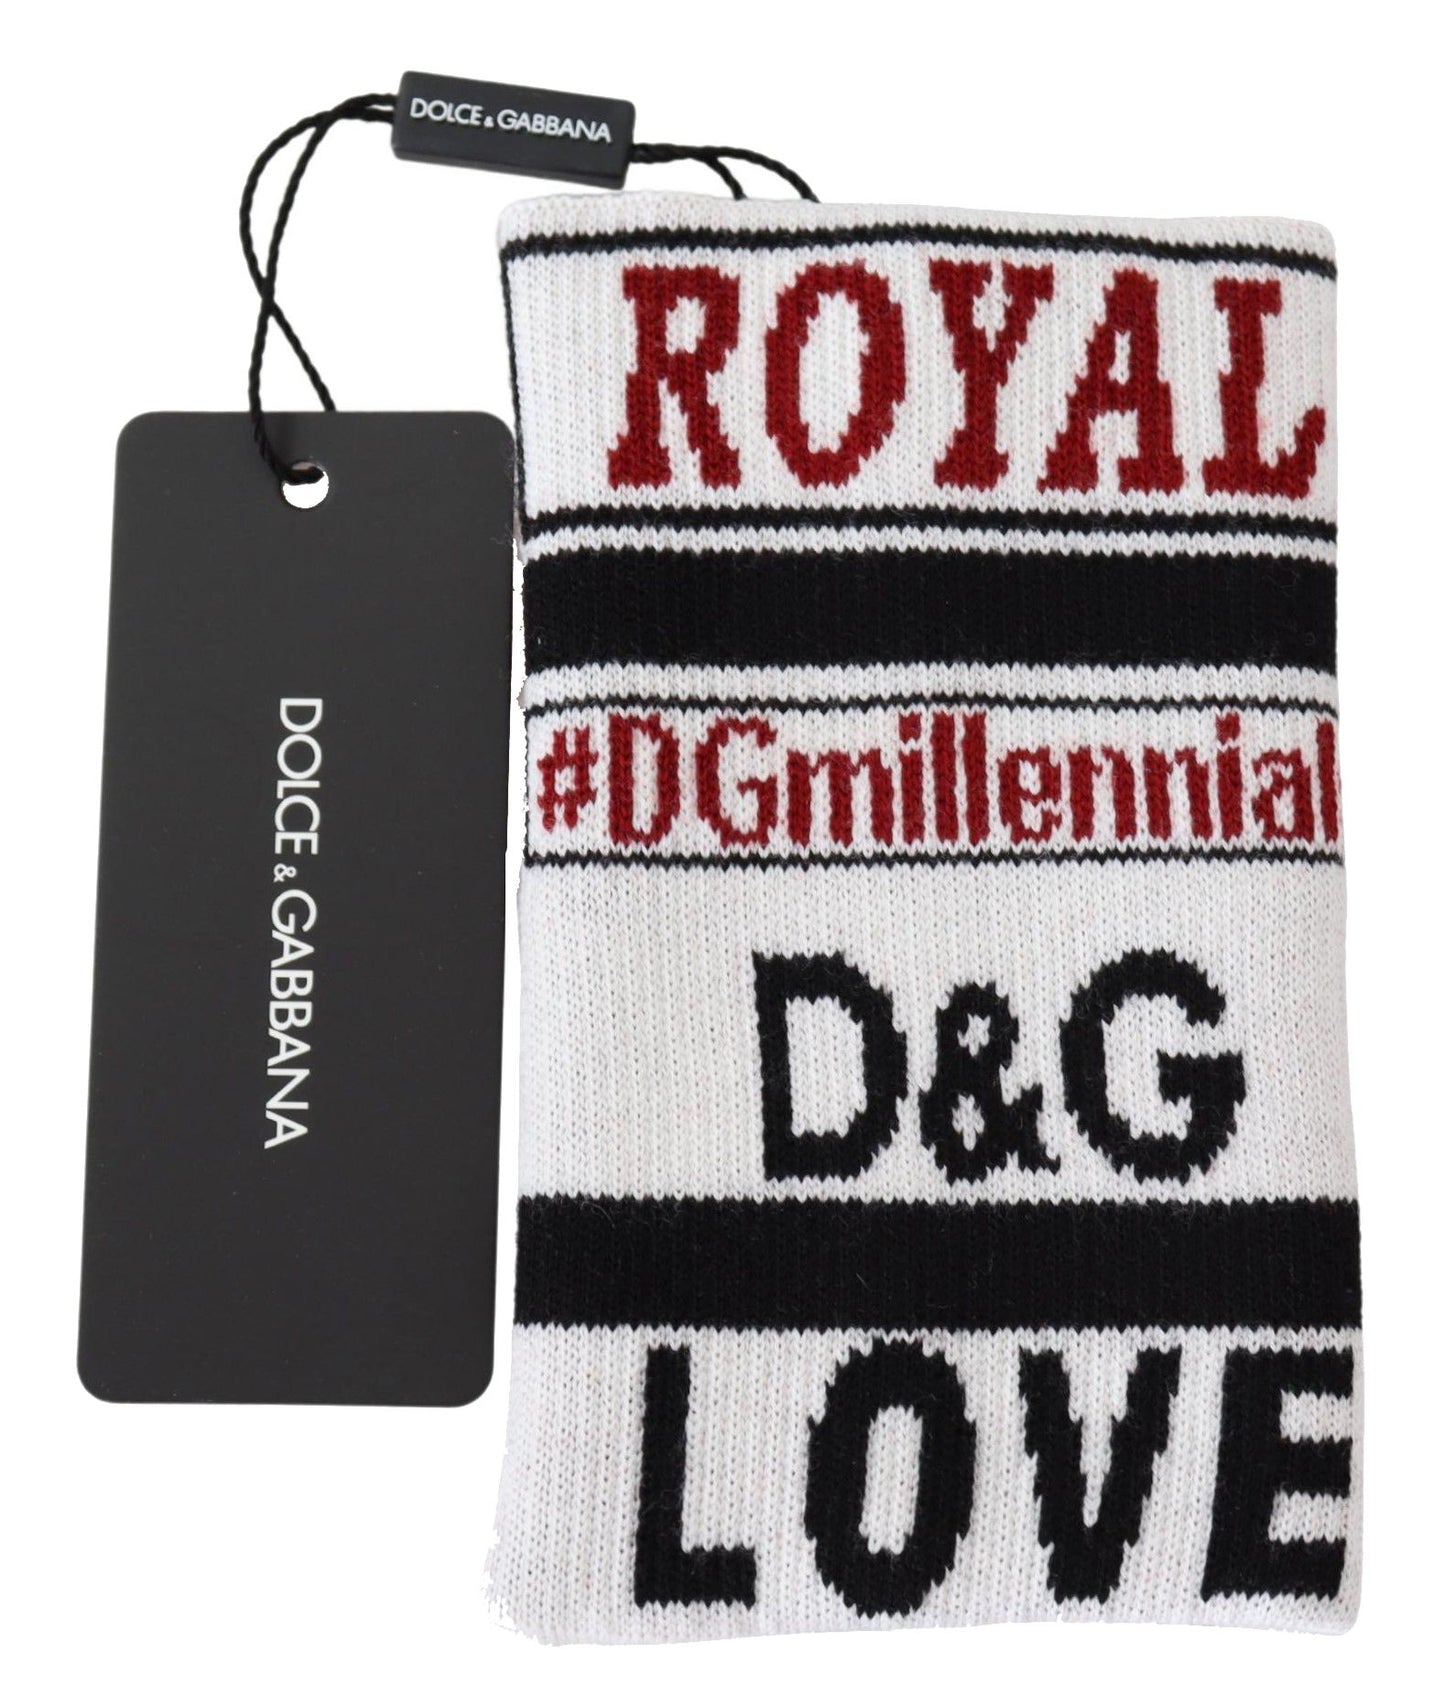 Dolce & Gabbana Multicolor Wool Knit D&G Love Wristbbang enveloppe